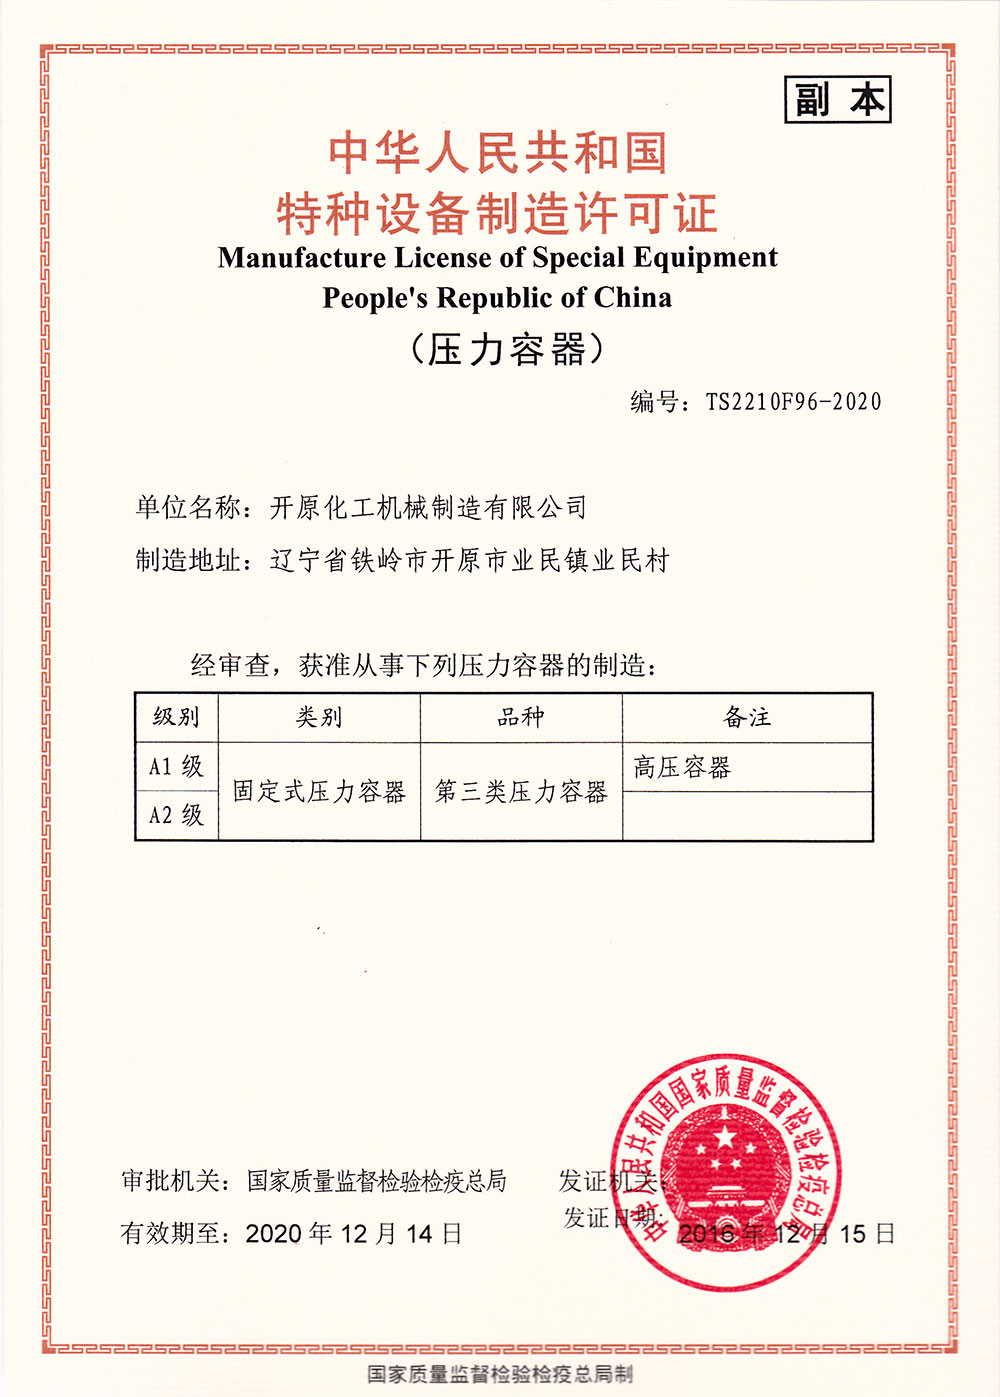 Manufacturing license